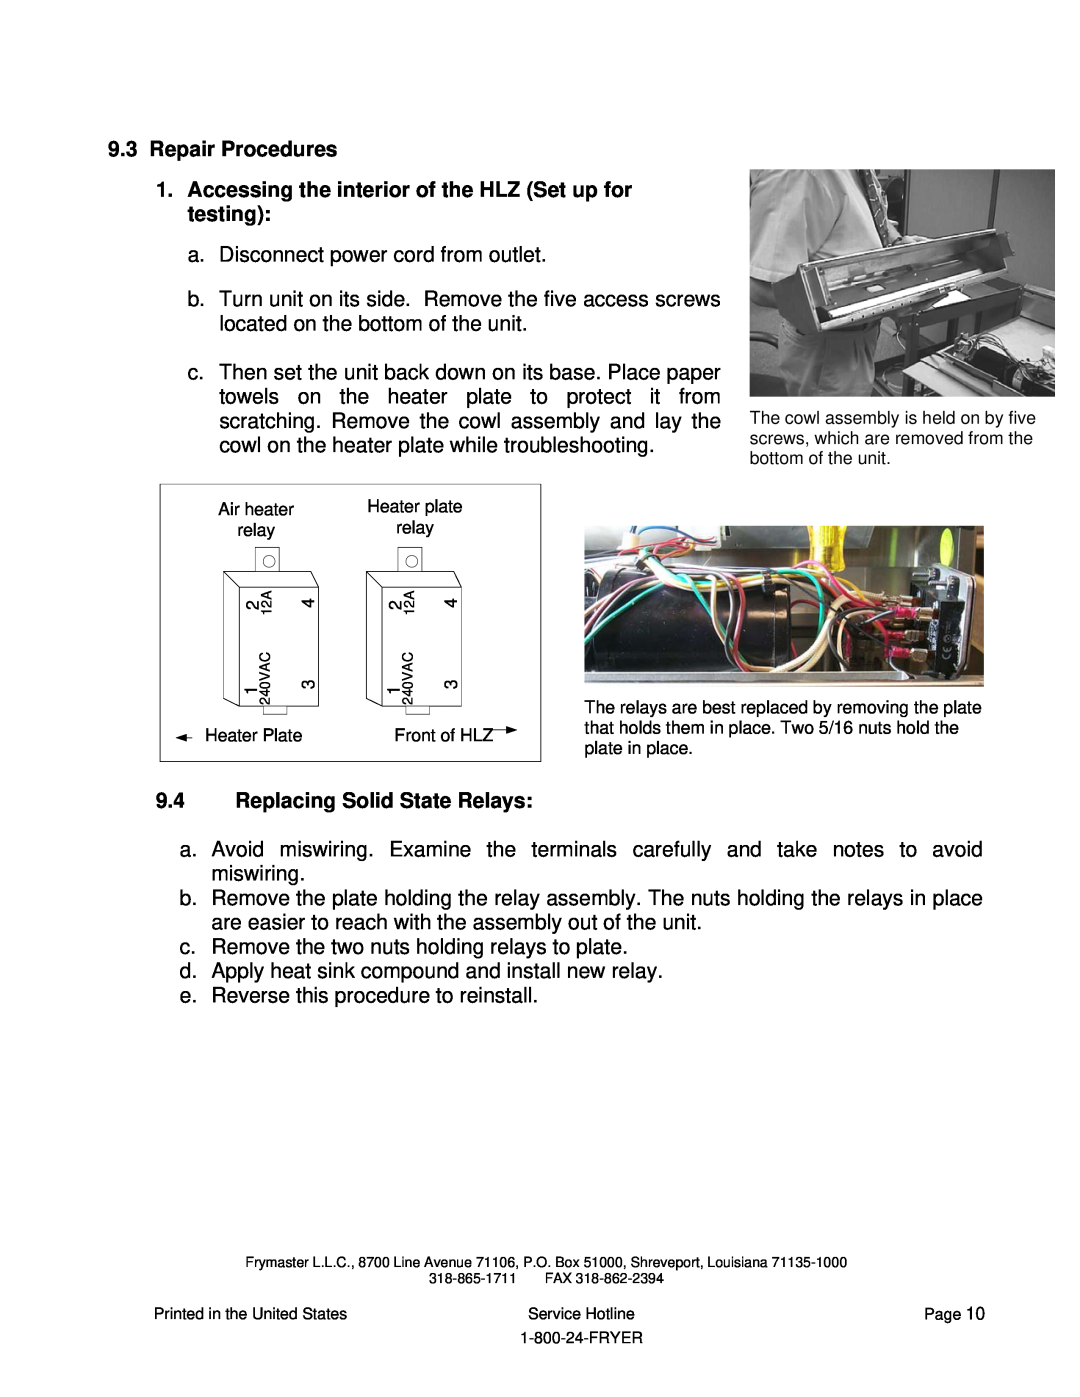 Frymaster HLZ 22, HLZ 18 service manual 9.3Repair Procedures, 9.4Replacing Solid State Relays 